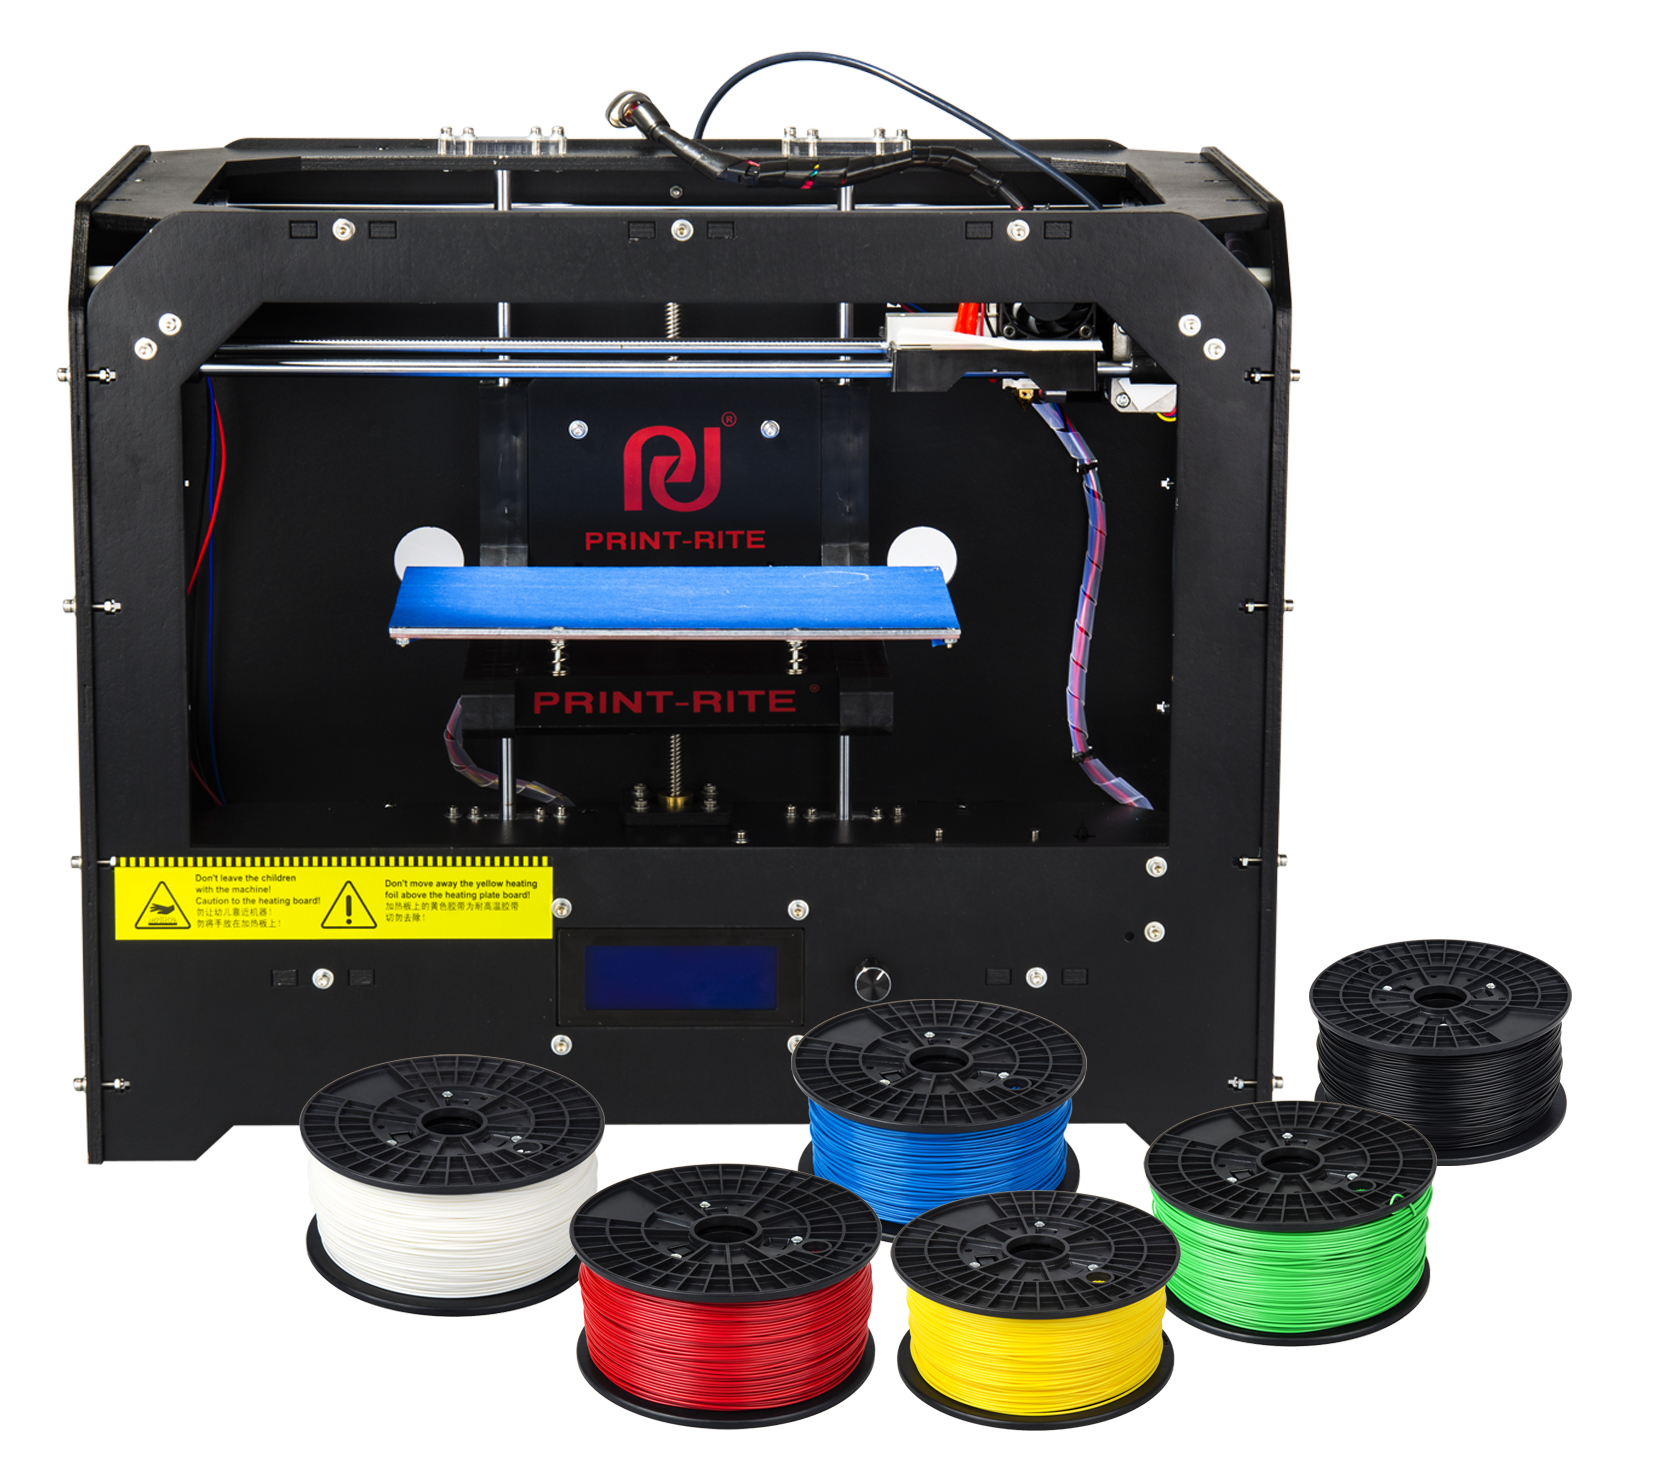 Print-Rite CoLiDoTM Desktop 3D Printer and ABS/PLA Filaments Fulfill ... - Machine Filament